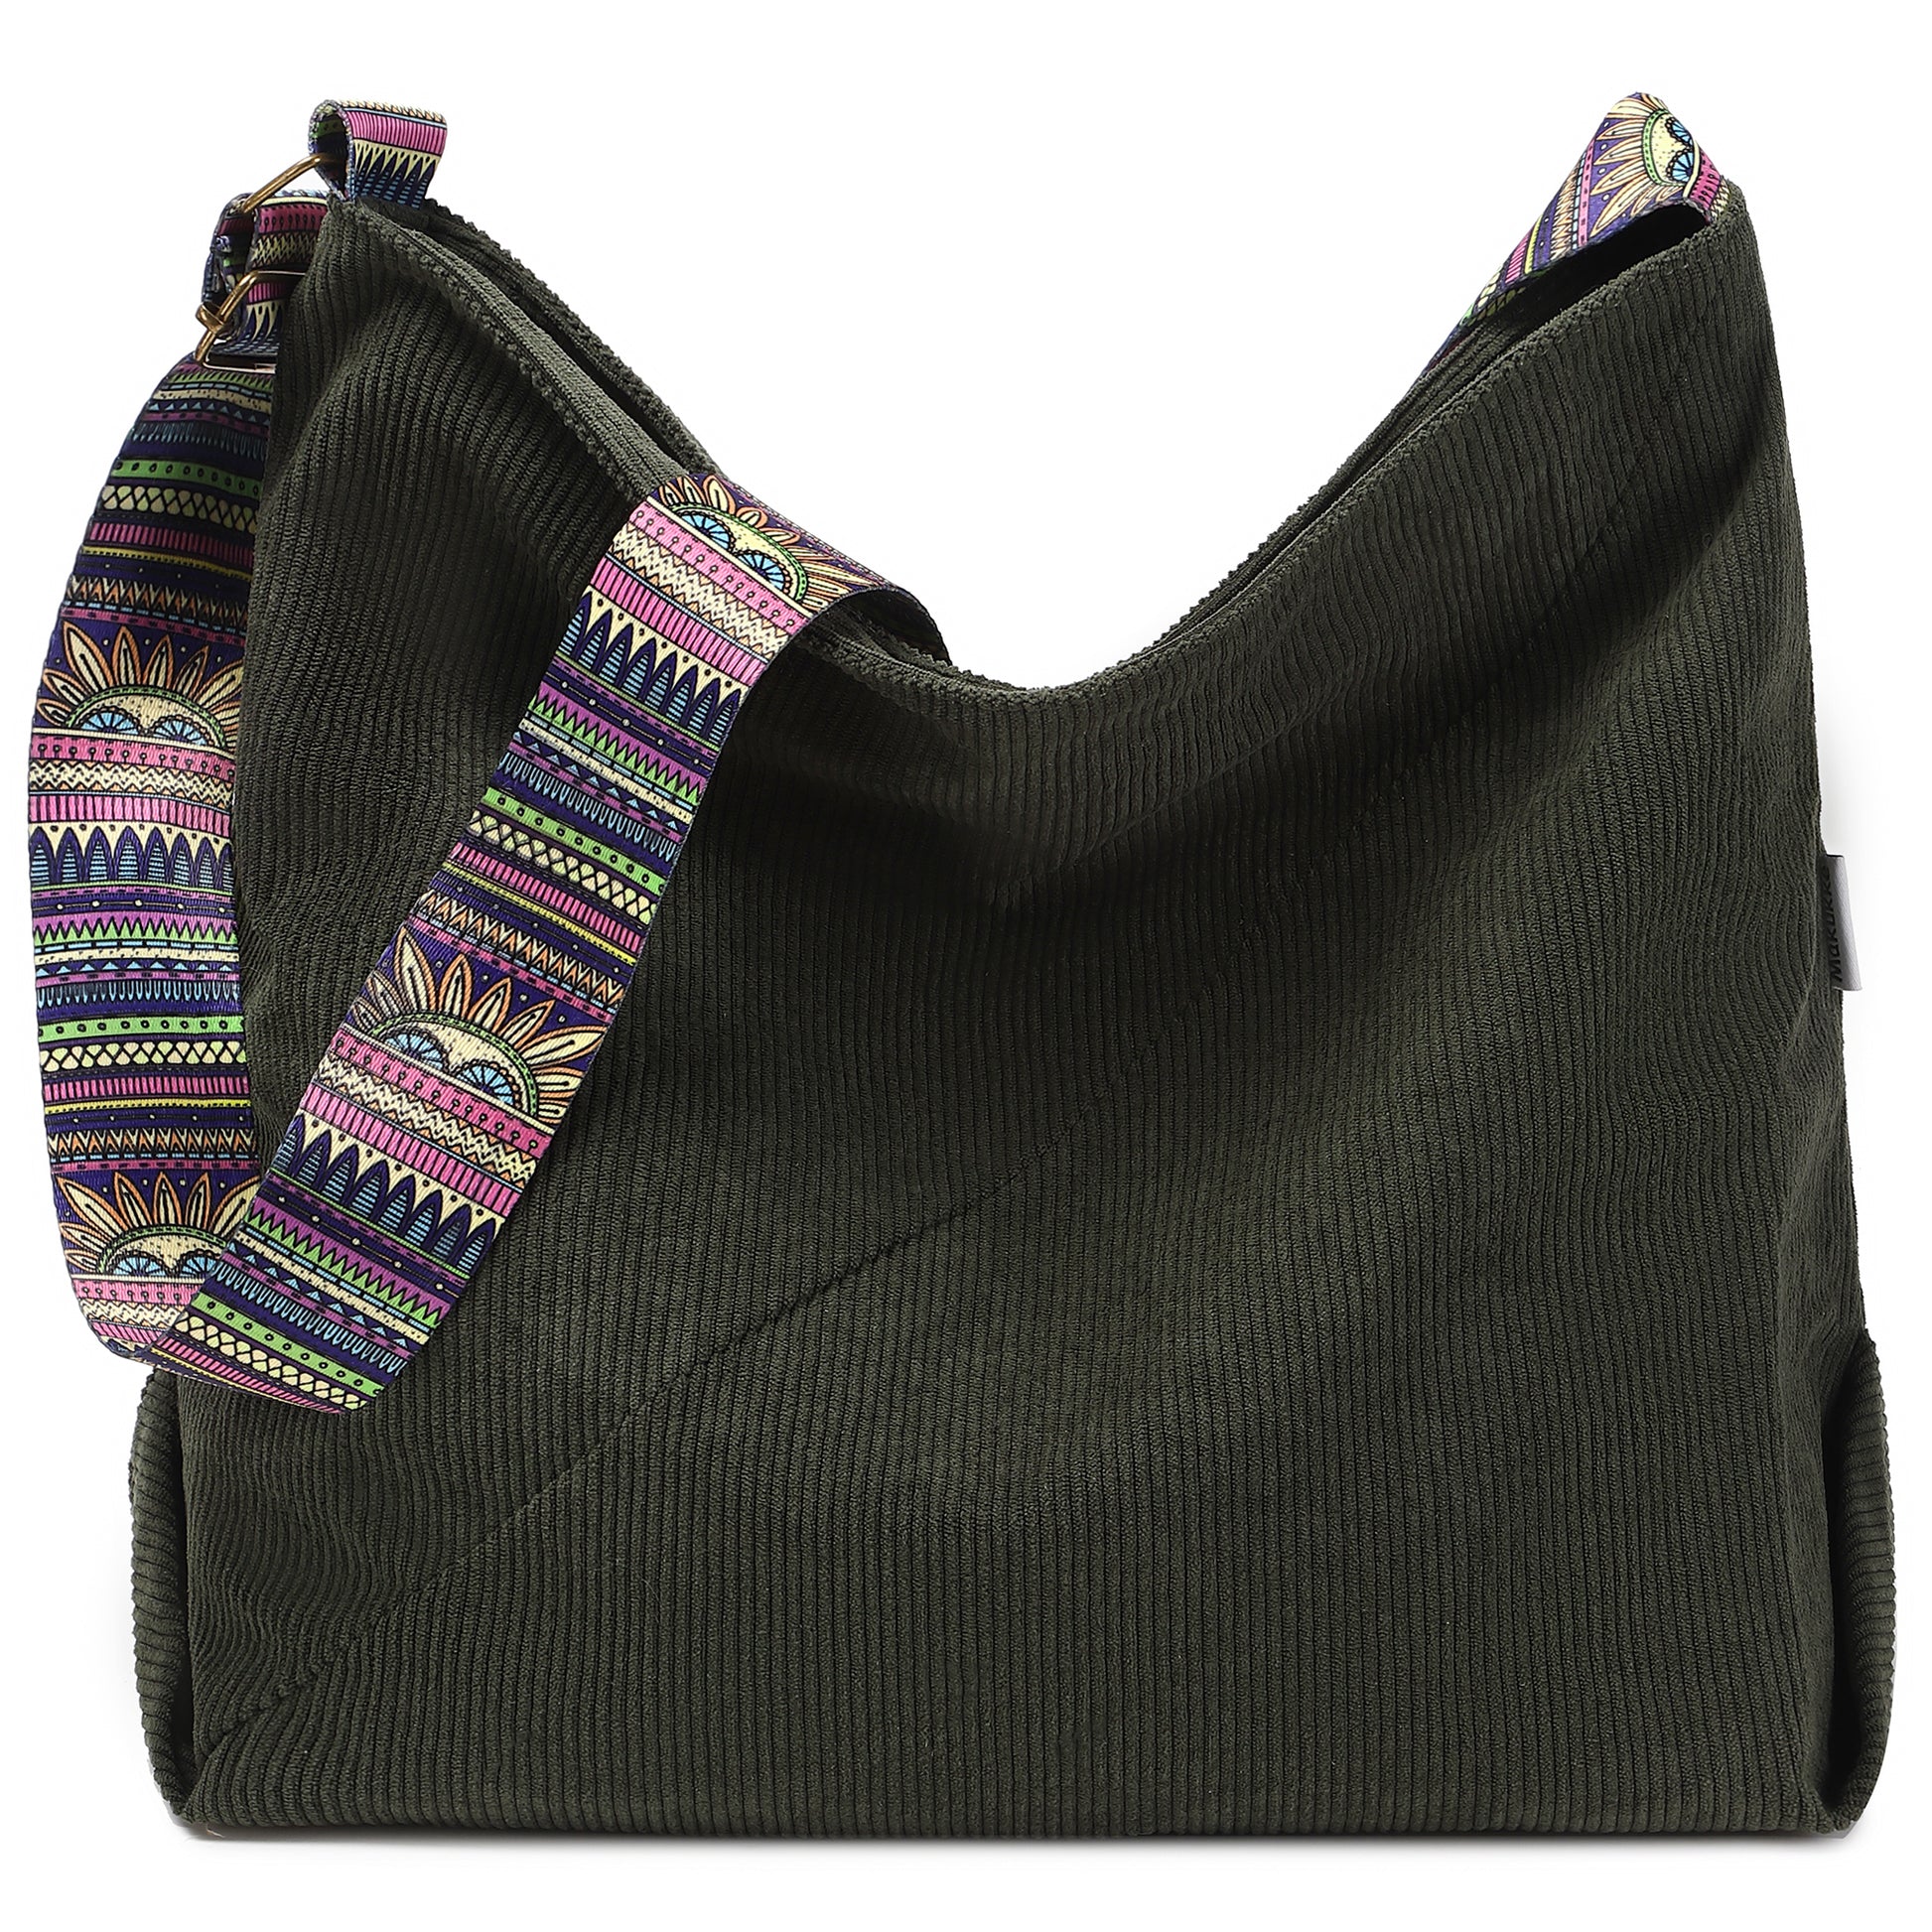 Makukke Tote Bag Women Large Crossbody Bag Stylish Handbag for Women Corduroy Hobo Bag Fashion Shoulder Bag Purse